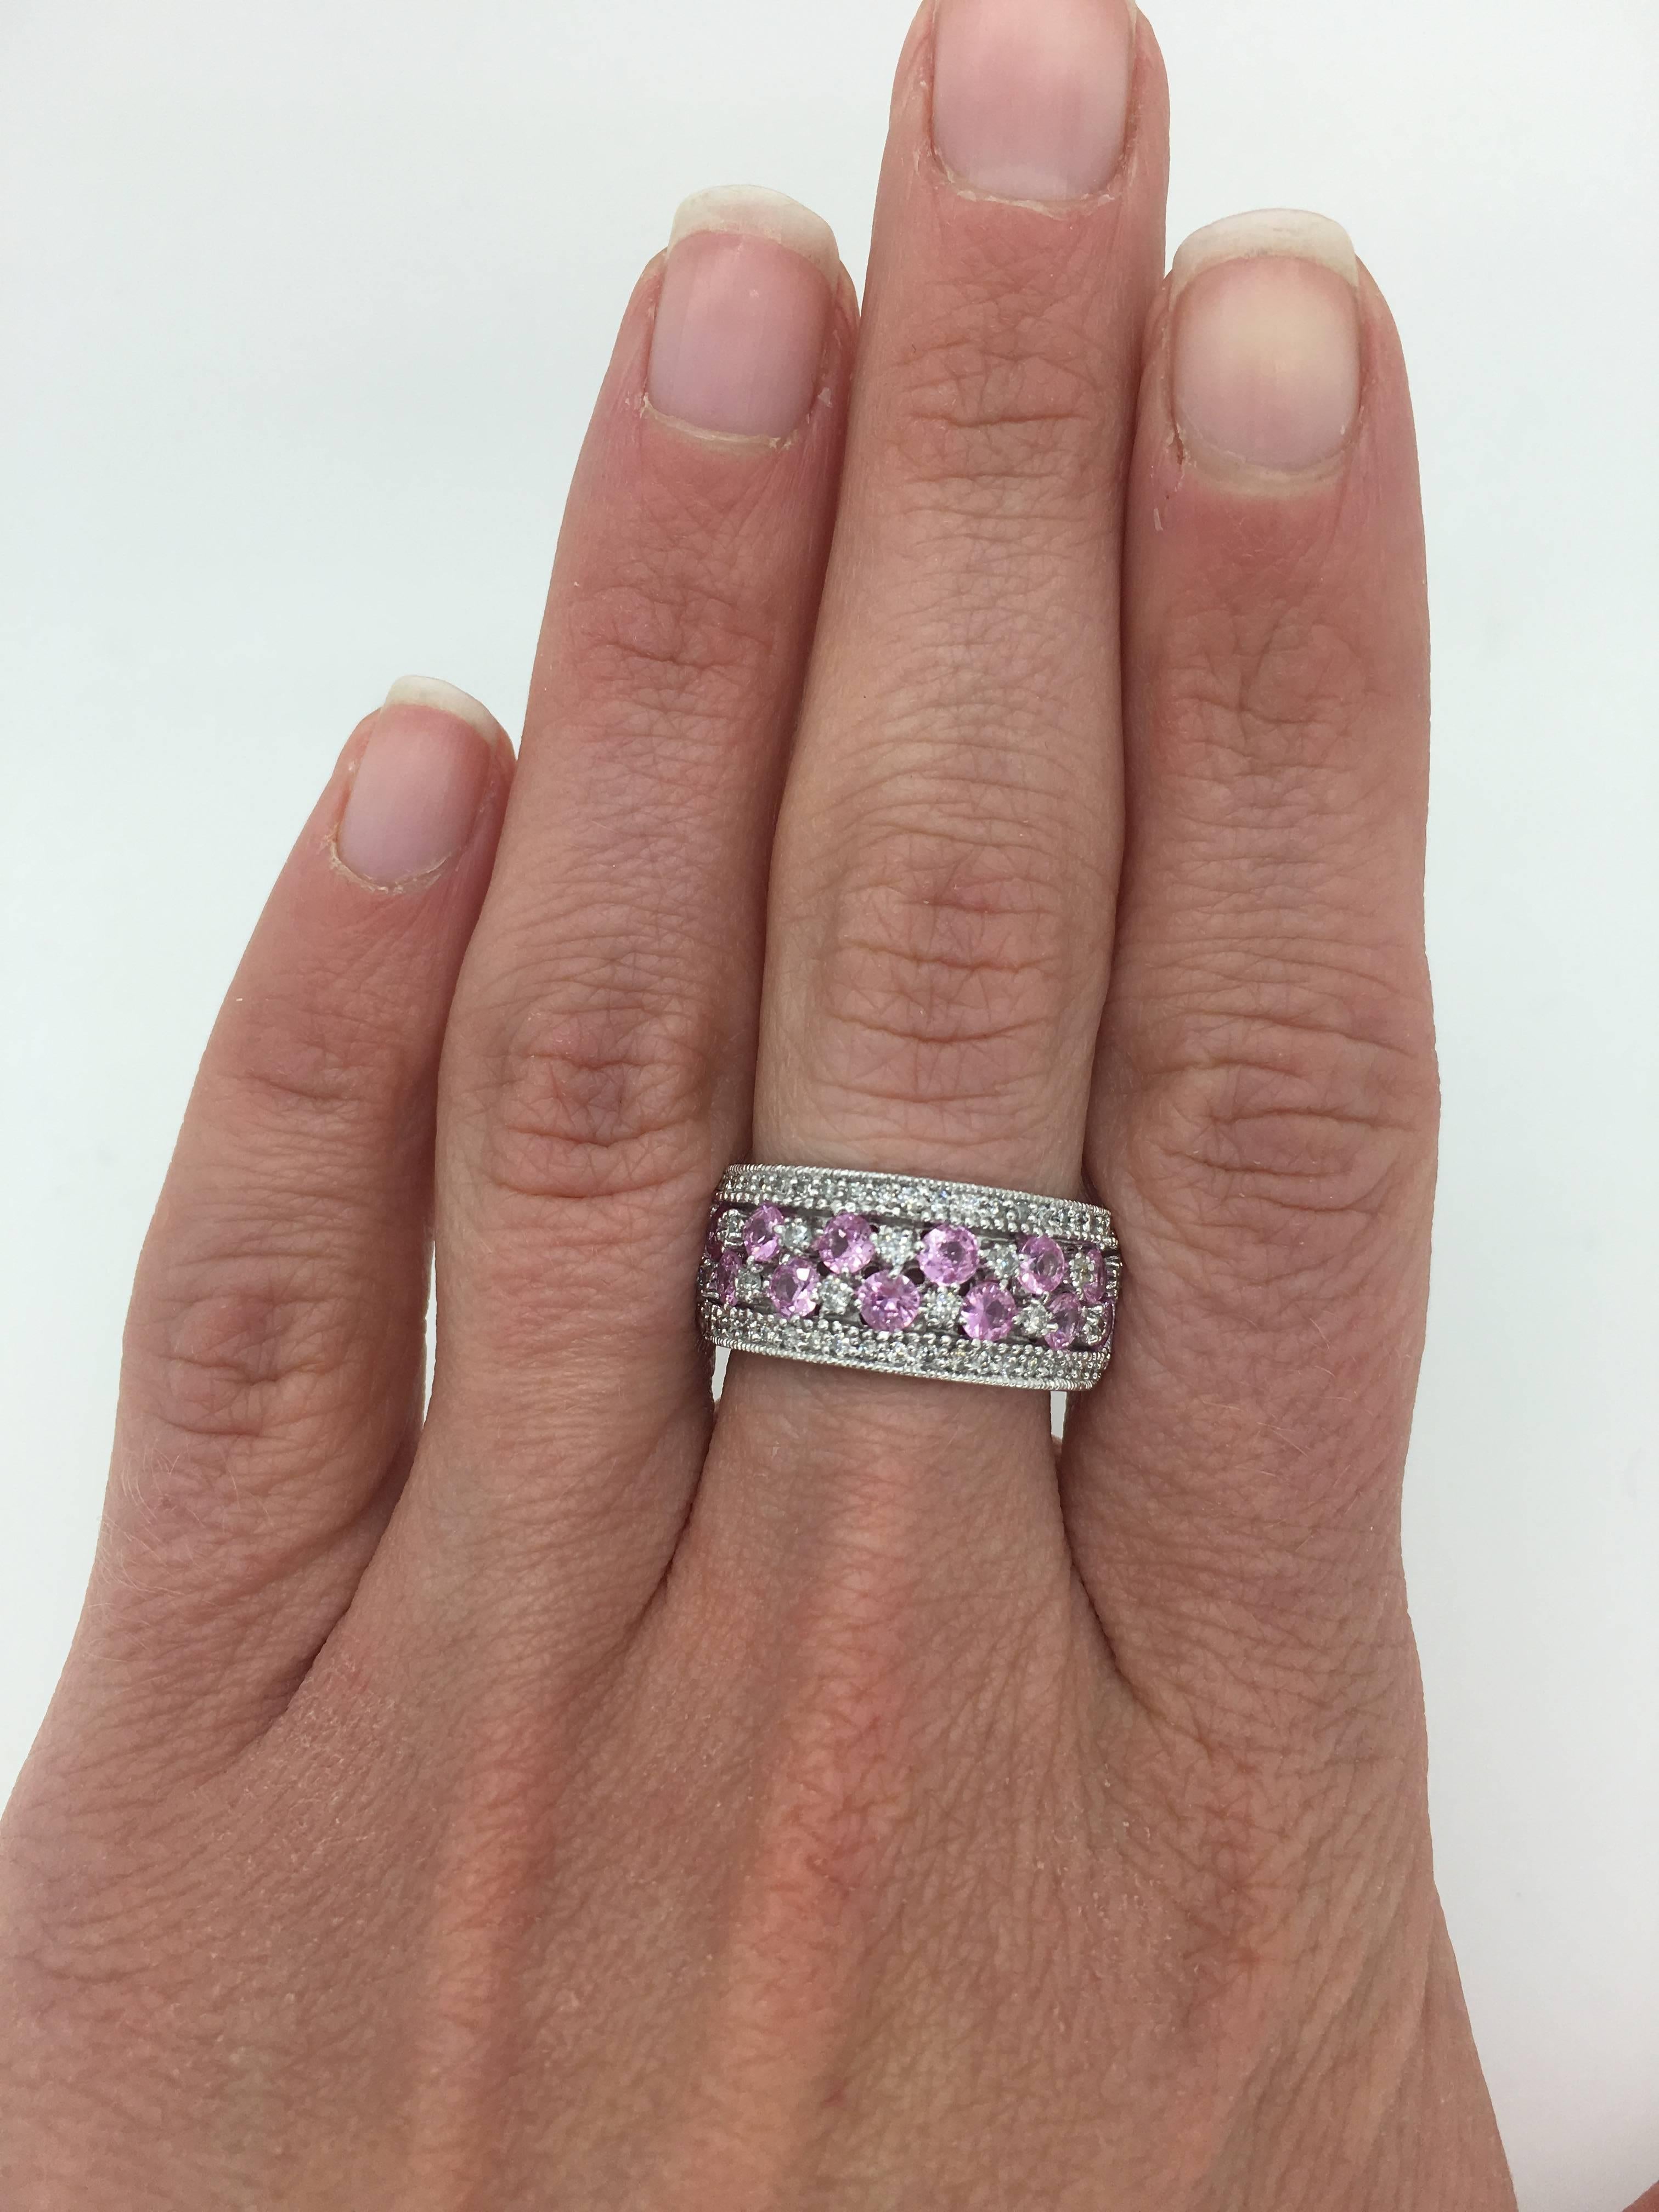 EFFY Diamond and pink sapphire band in 14K White Gold

Designer: EFFY
Gemstone: 12 Round Cut Pink Sapphire
Gemstone Size: Approximately 2.75mm
Diamond Carat Weight: Approximately .65CTW
Diamond Cut: 52 Round Brilliant 
Color: Average G-I
Clarity: